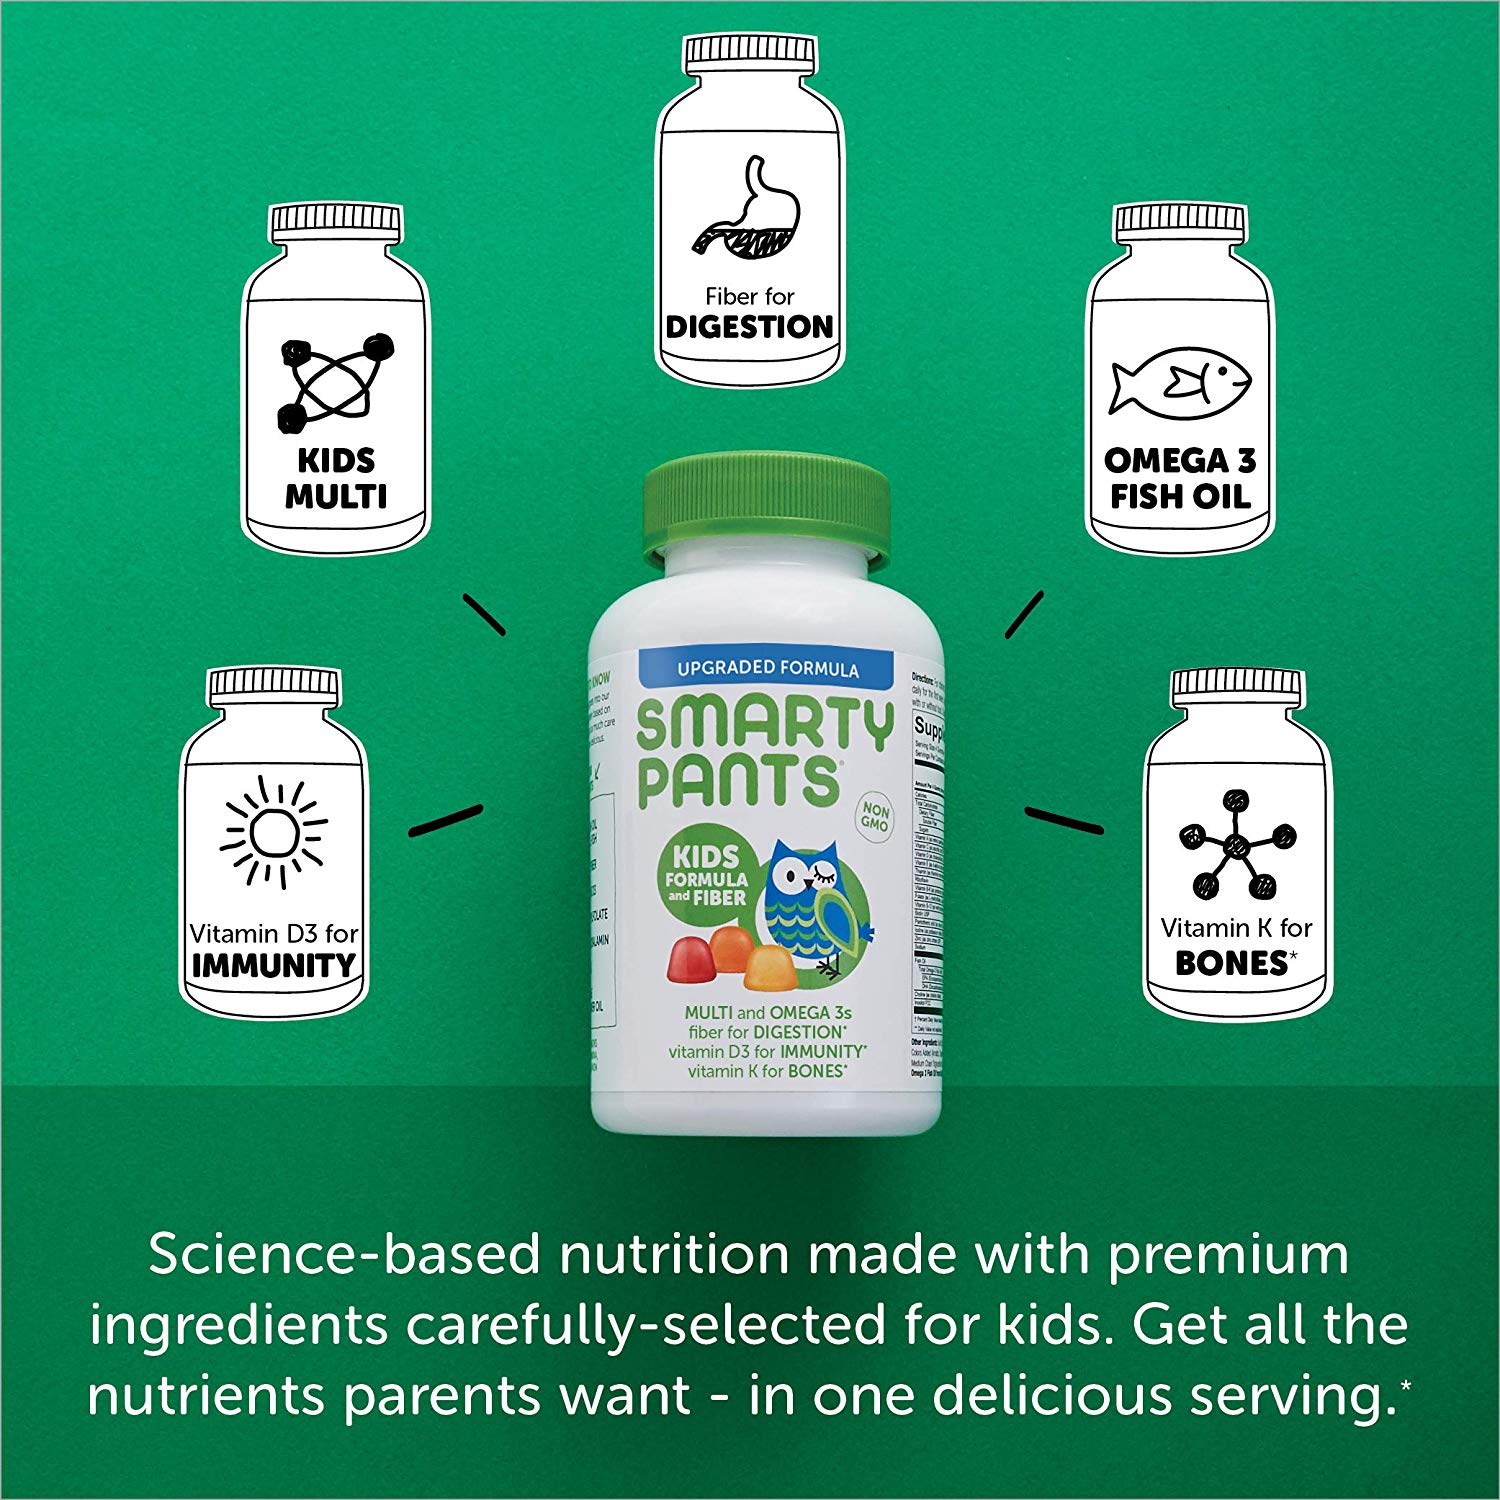 SmartyPants Kids Formula & Fiber Daily Gummy Vitamins ...